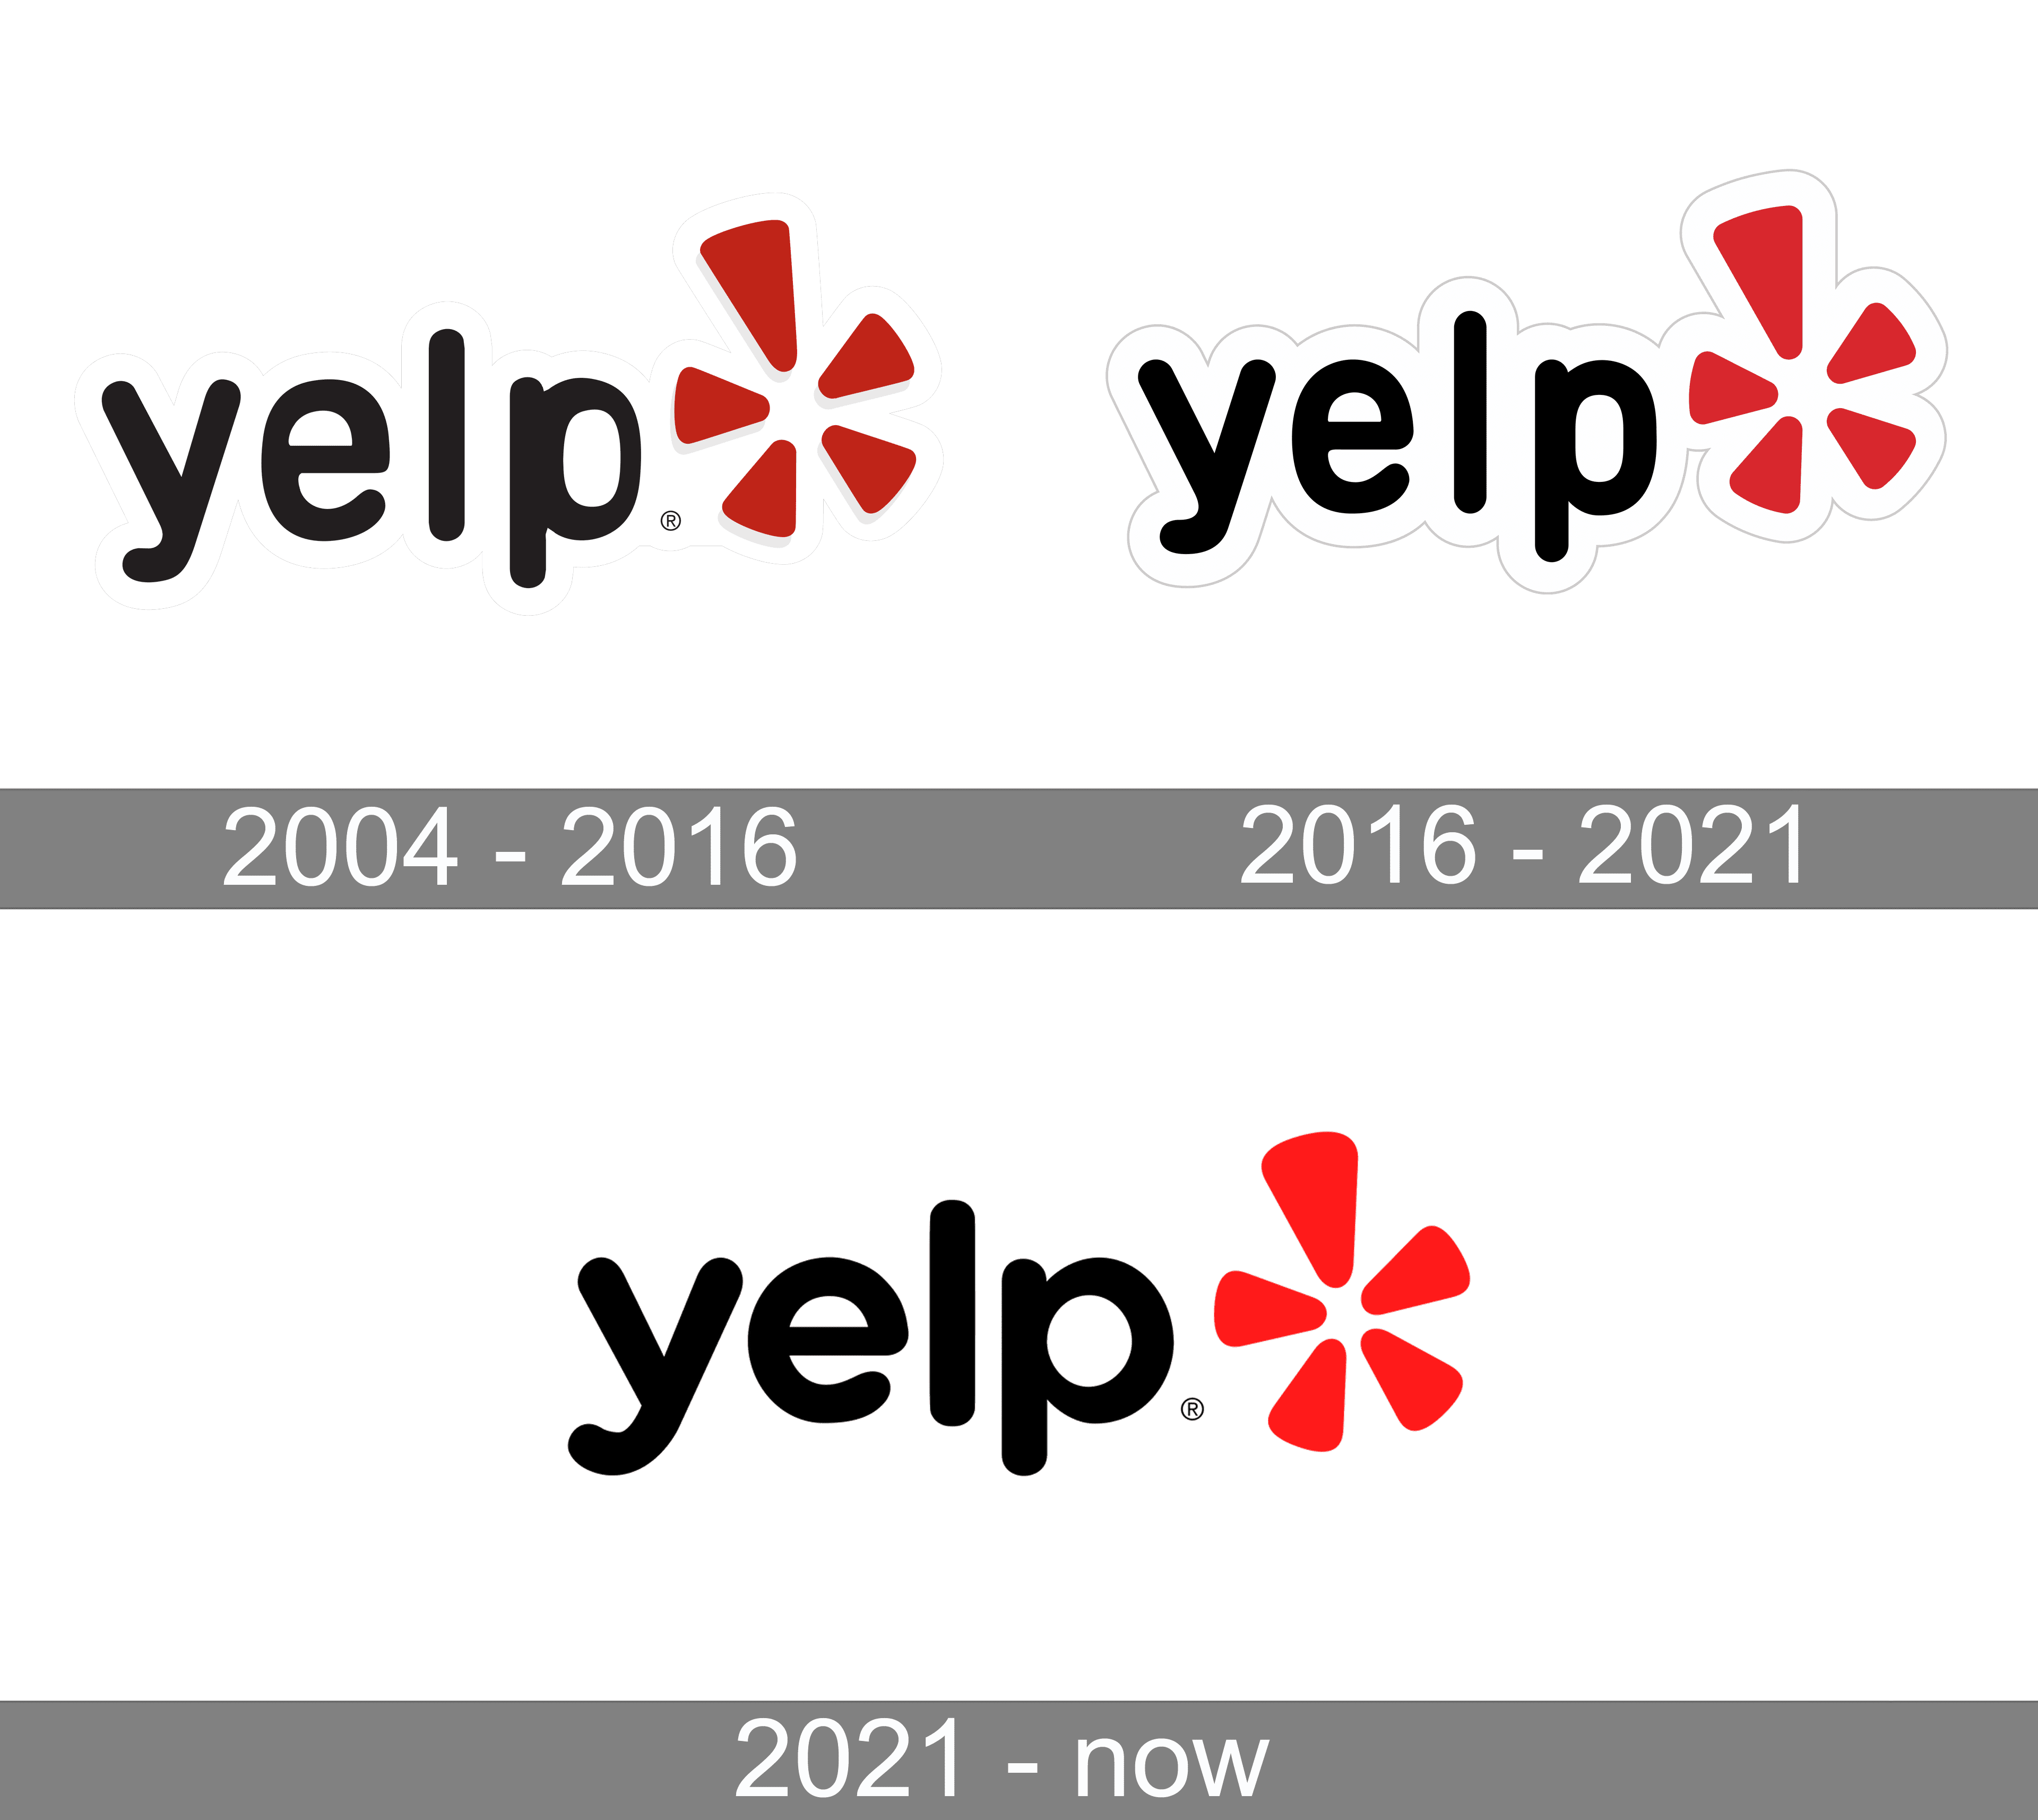 yelp logo transparent